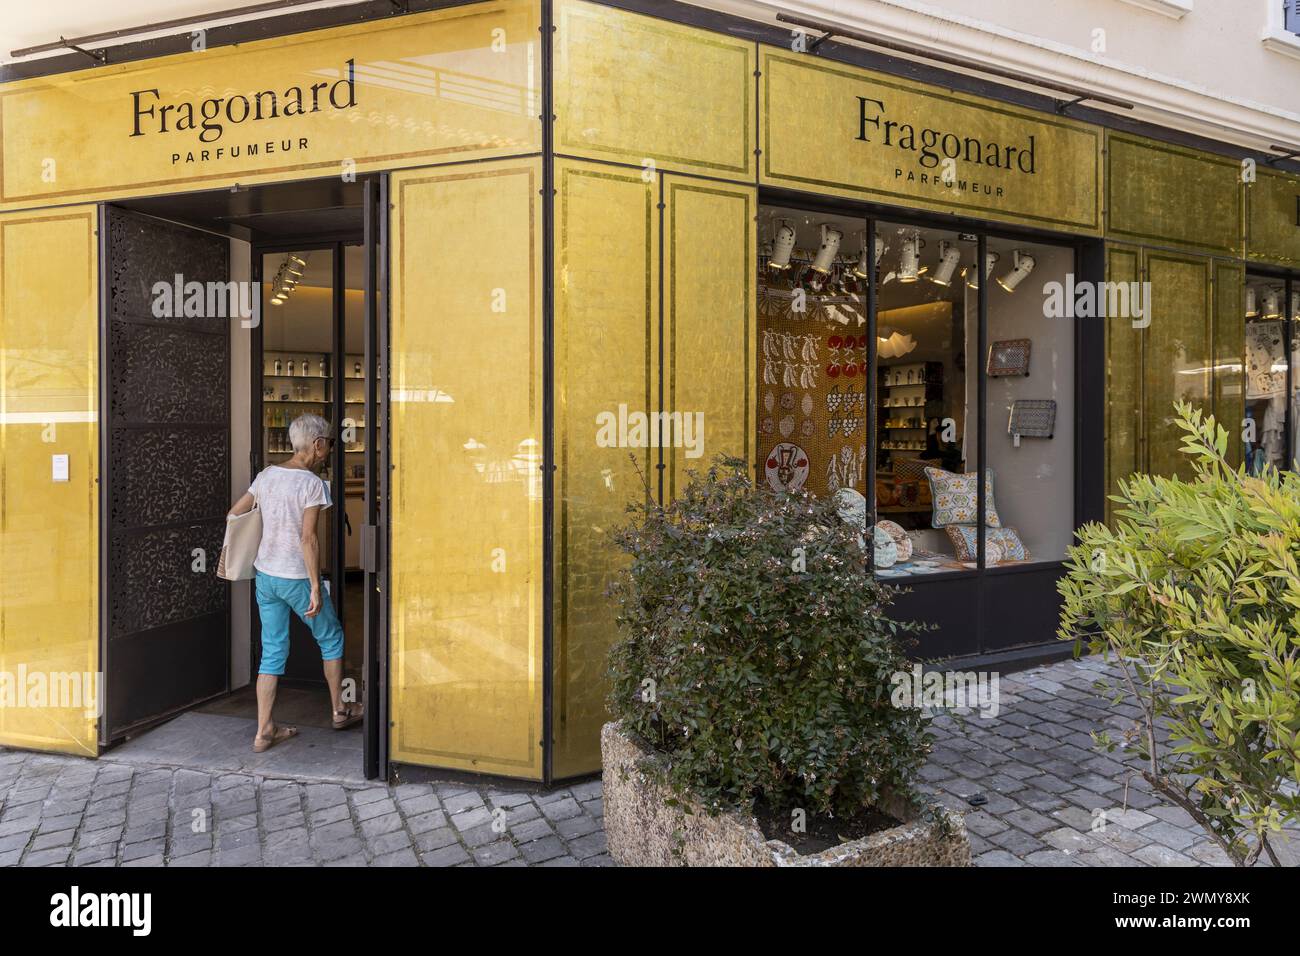 France, Alpes-Maritimes, Cannes, facade of the perfumer Fragonard’s store Stock Photo